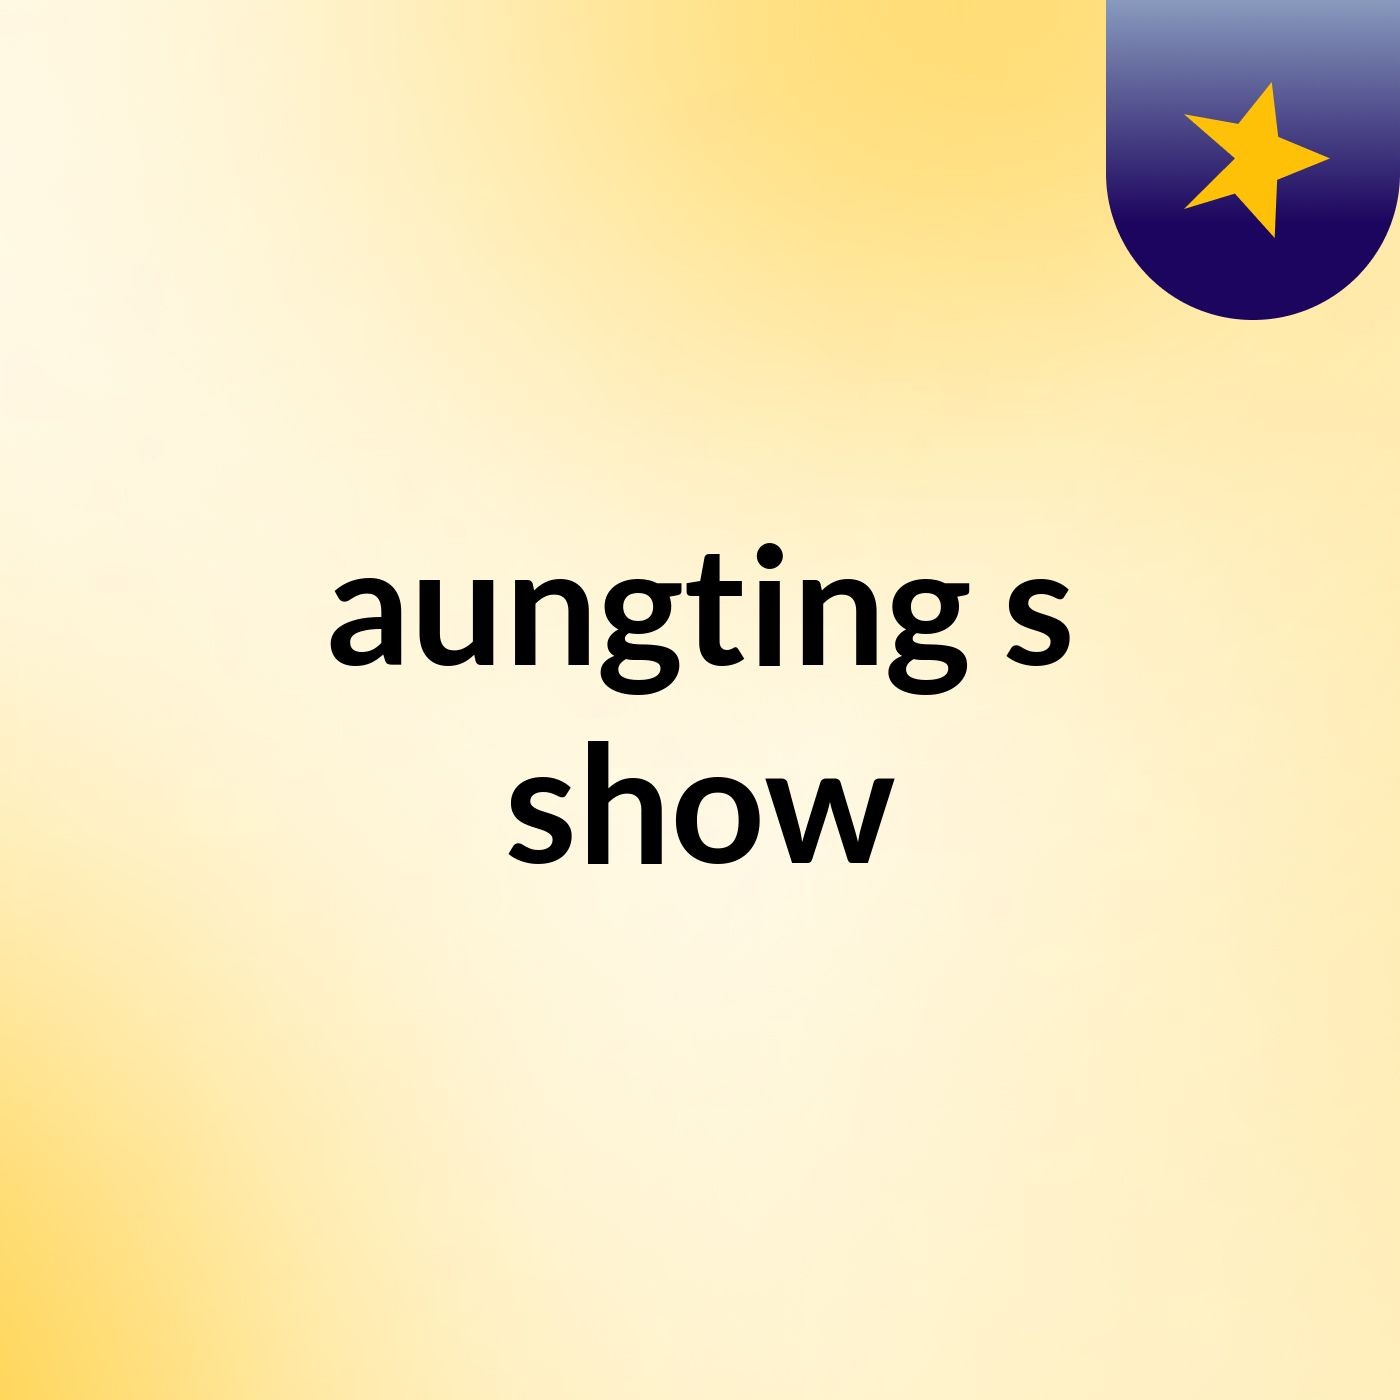 aungting's show